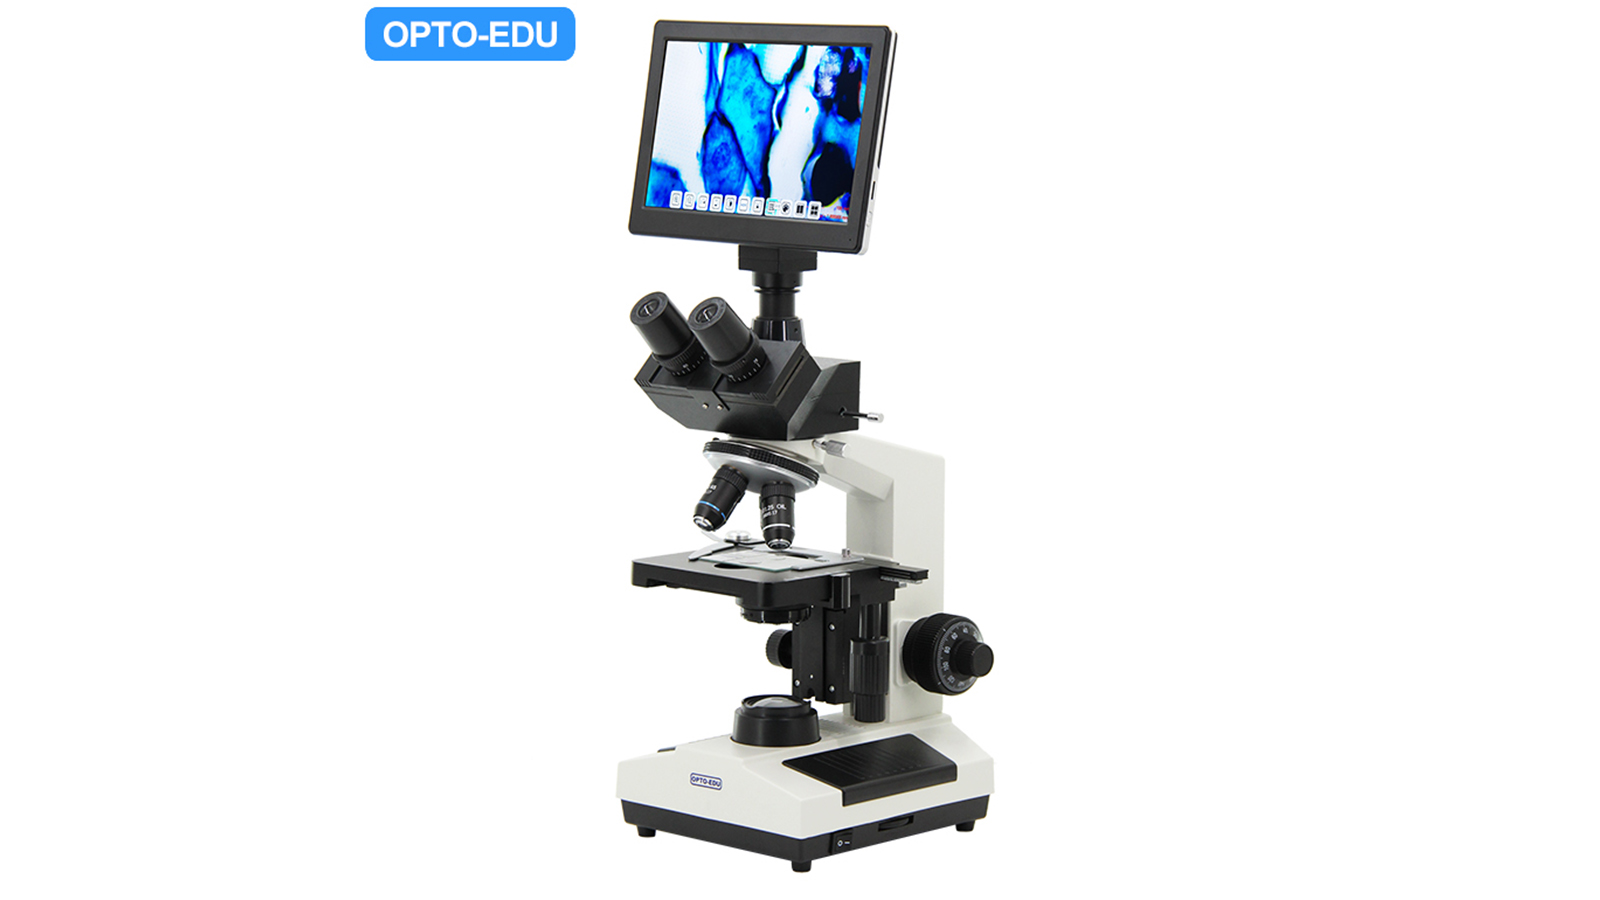 Opto-EDU A33.1009 9" LCD numérique Microscope biologique, 5.0M USB HDMI + Install Voir